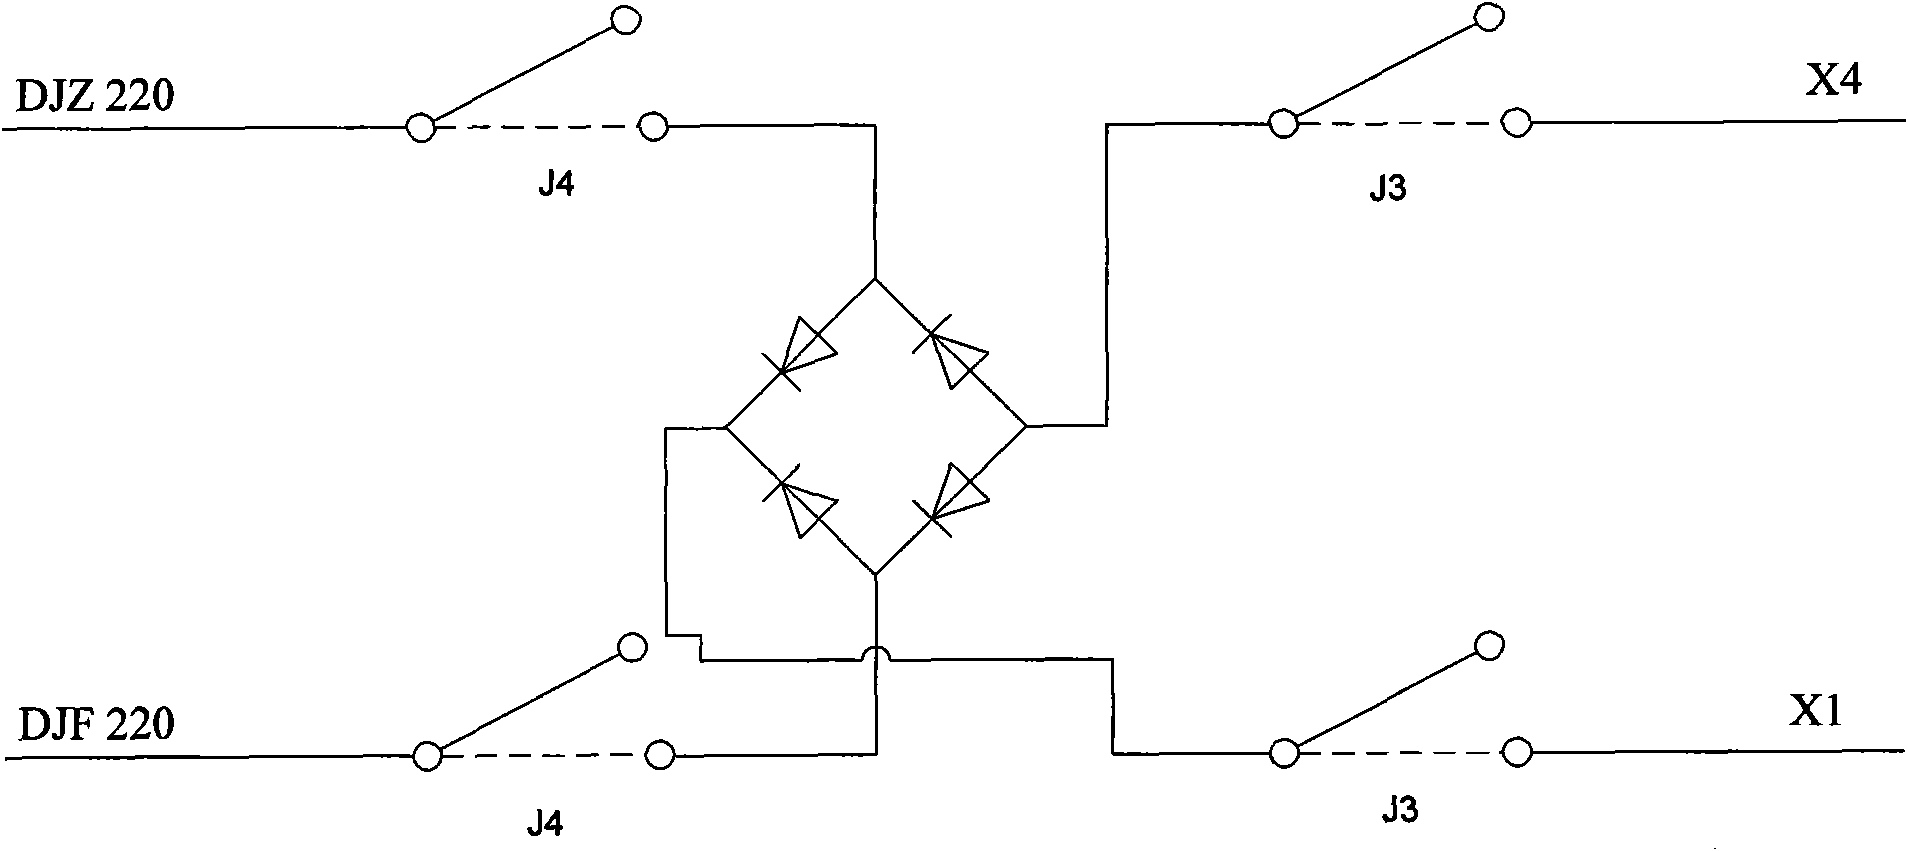 Computer interlocking system and operation method thereof